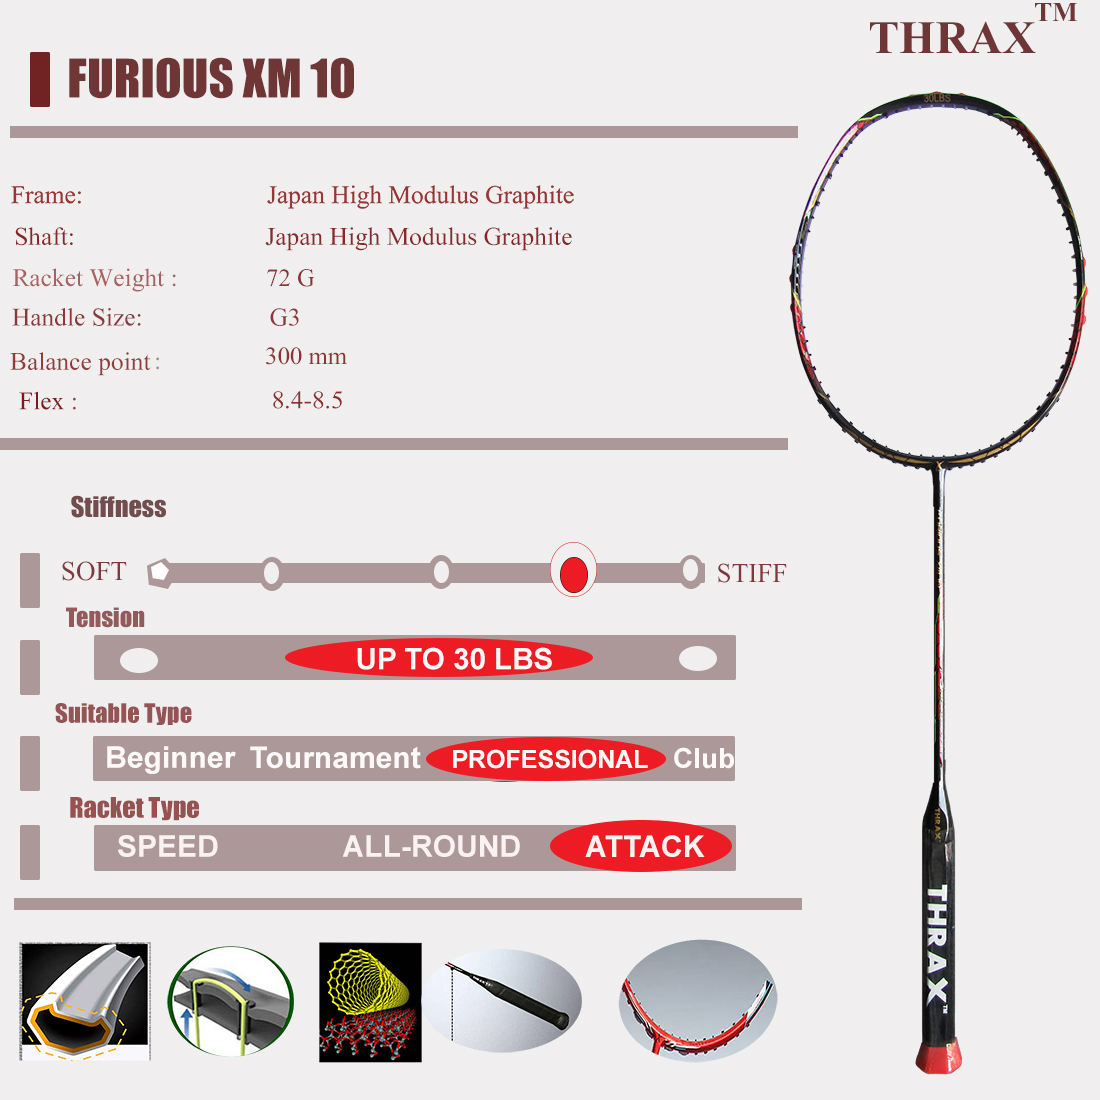 Thrax_Furious_XM_10_Badminton_Racket_Specification_AB